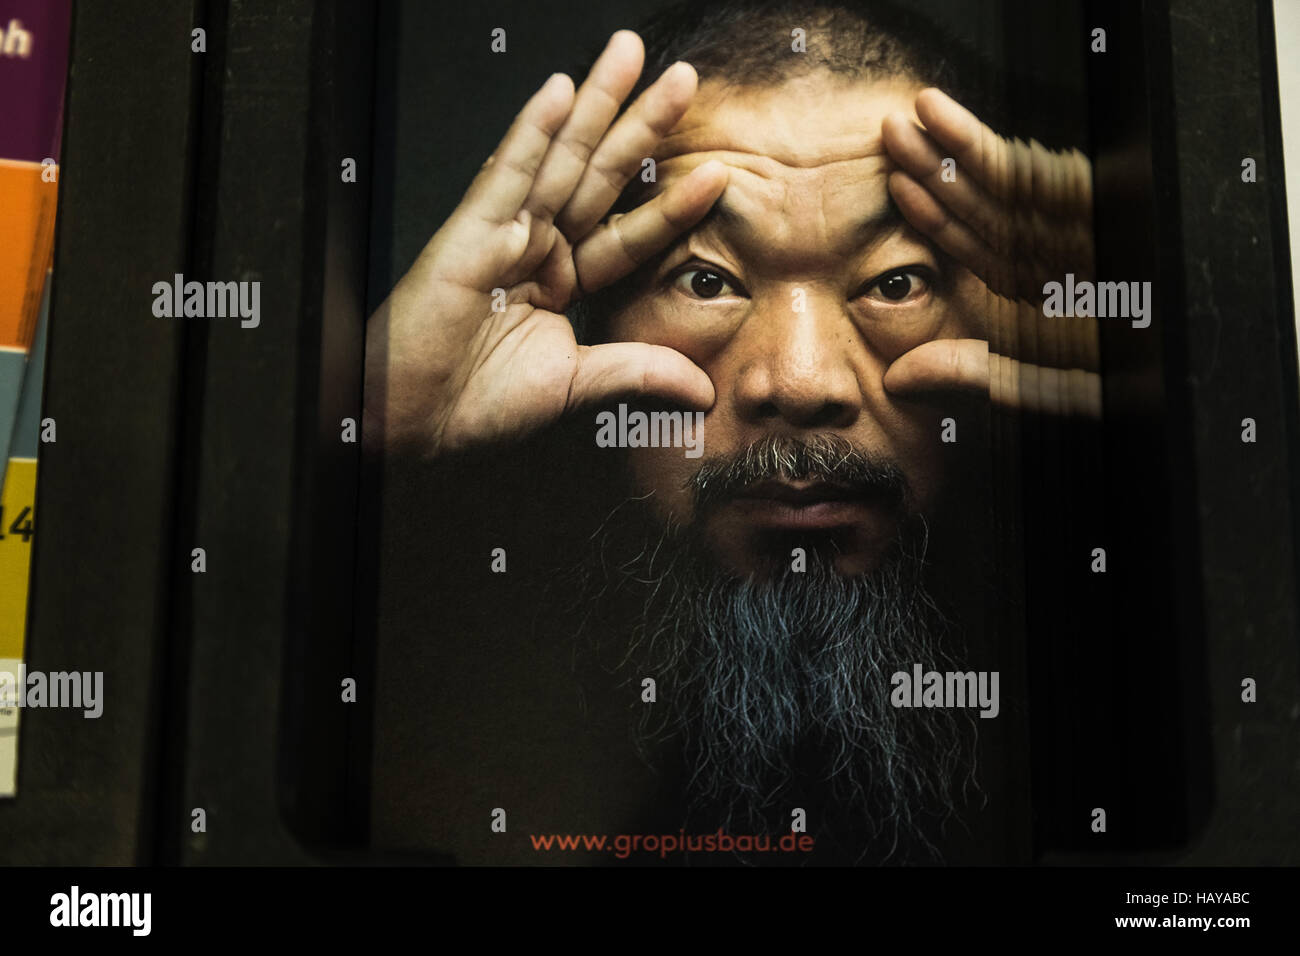 Pruebas von Ai Weiwei - Photocall Foto de stock